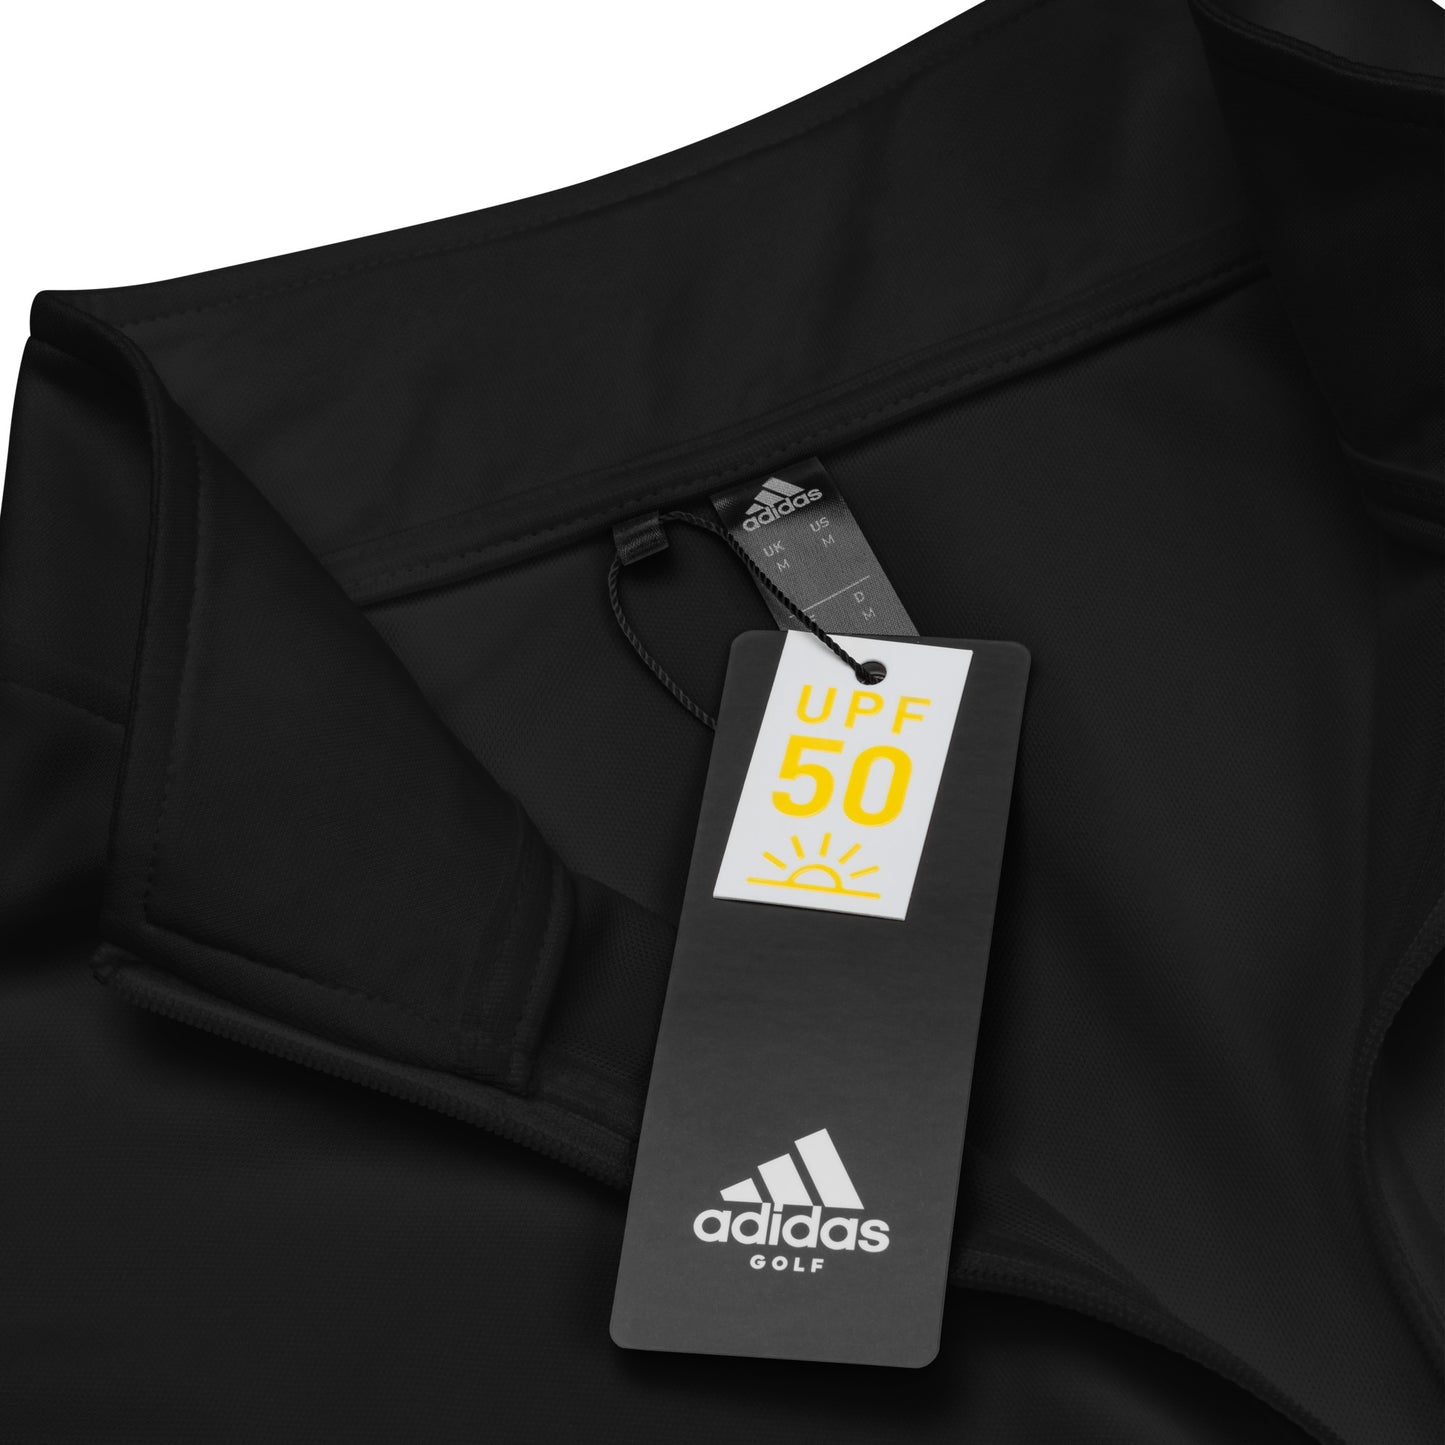 Delta 88 Adidas Quarter zip pullover